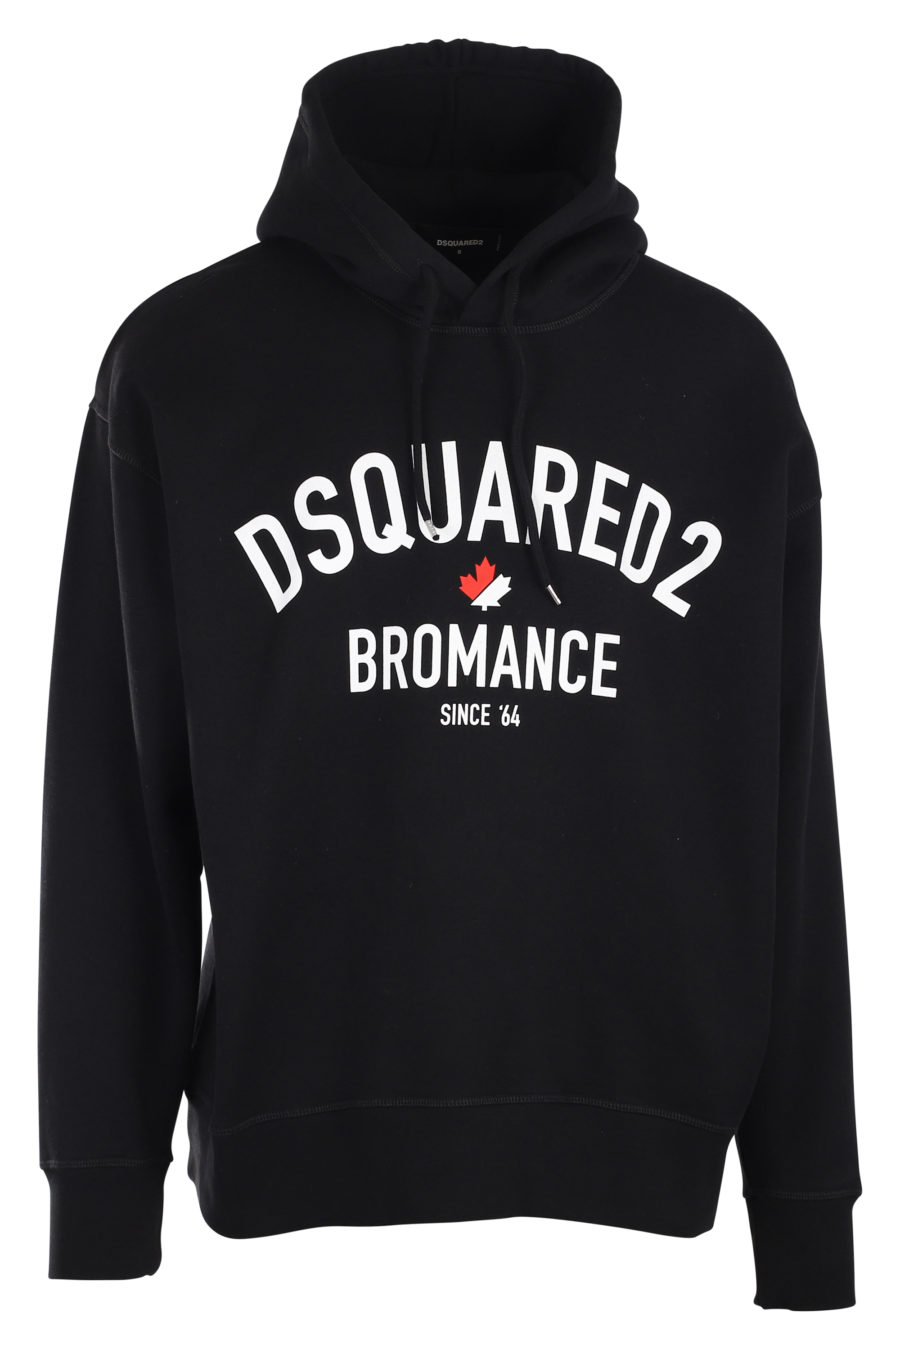 Black hooded sweatshirt with white "bromance" logo - IMG 9896